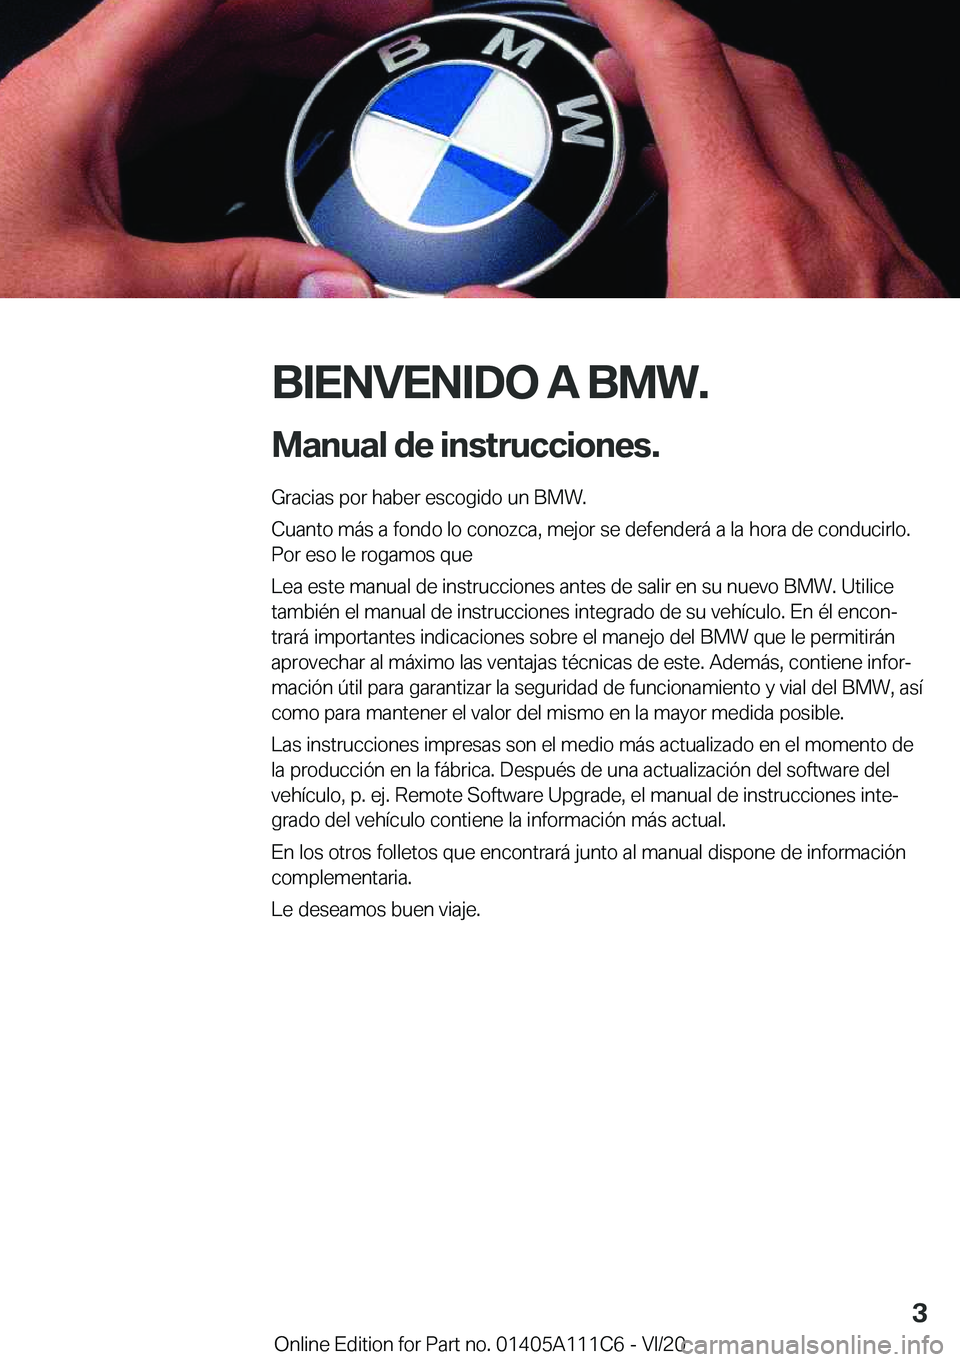 BMW 3 SERIES SEDAN PLUG-IN HYBRID 2021  Manuales de Empleo (in Spanish) �B�I�E�N�V�E�N�I�D�O��A��B�M�W�.
�M�a�n�u�a�l��d�e��i�n�s�t�r�u�c�c�i�o�n�e�s�. �G�r�a�c�i�a�s��p�o�r��h�a�b�e�r��e�s�c�o�g�i�d�o��u�n��B�M�W�.
�C�u�a�n�t�o��m�